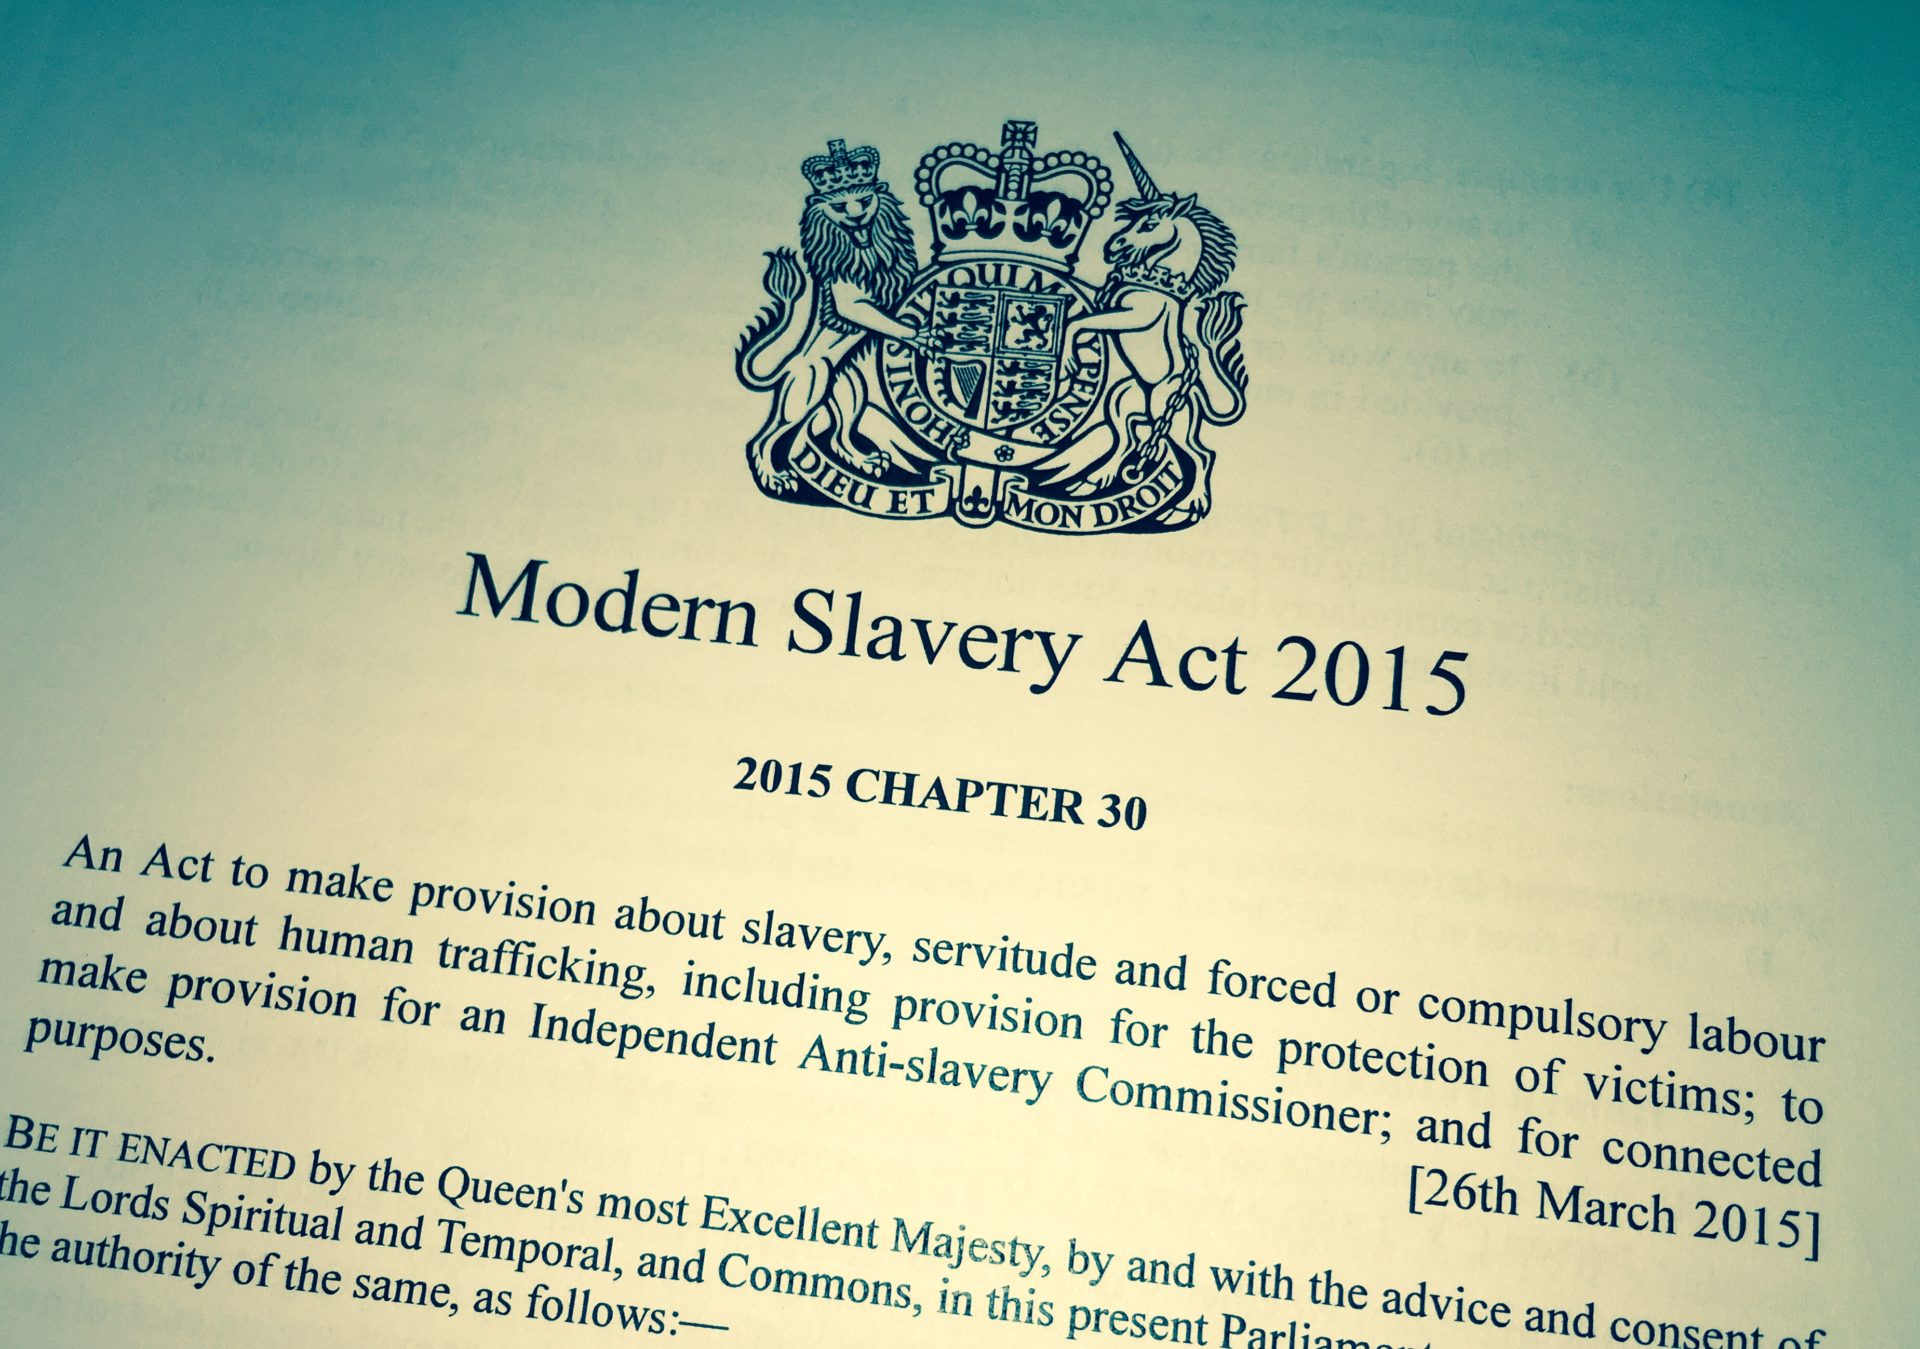 ANALYSIS-Is landmark UK law falling short in fight against modern slavery?